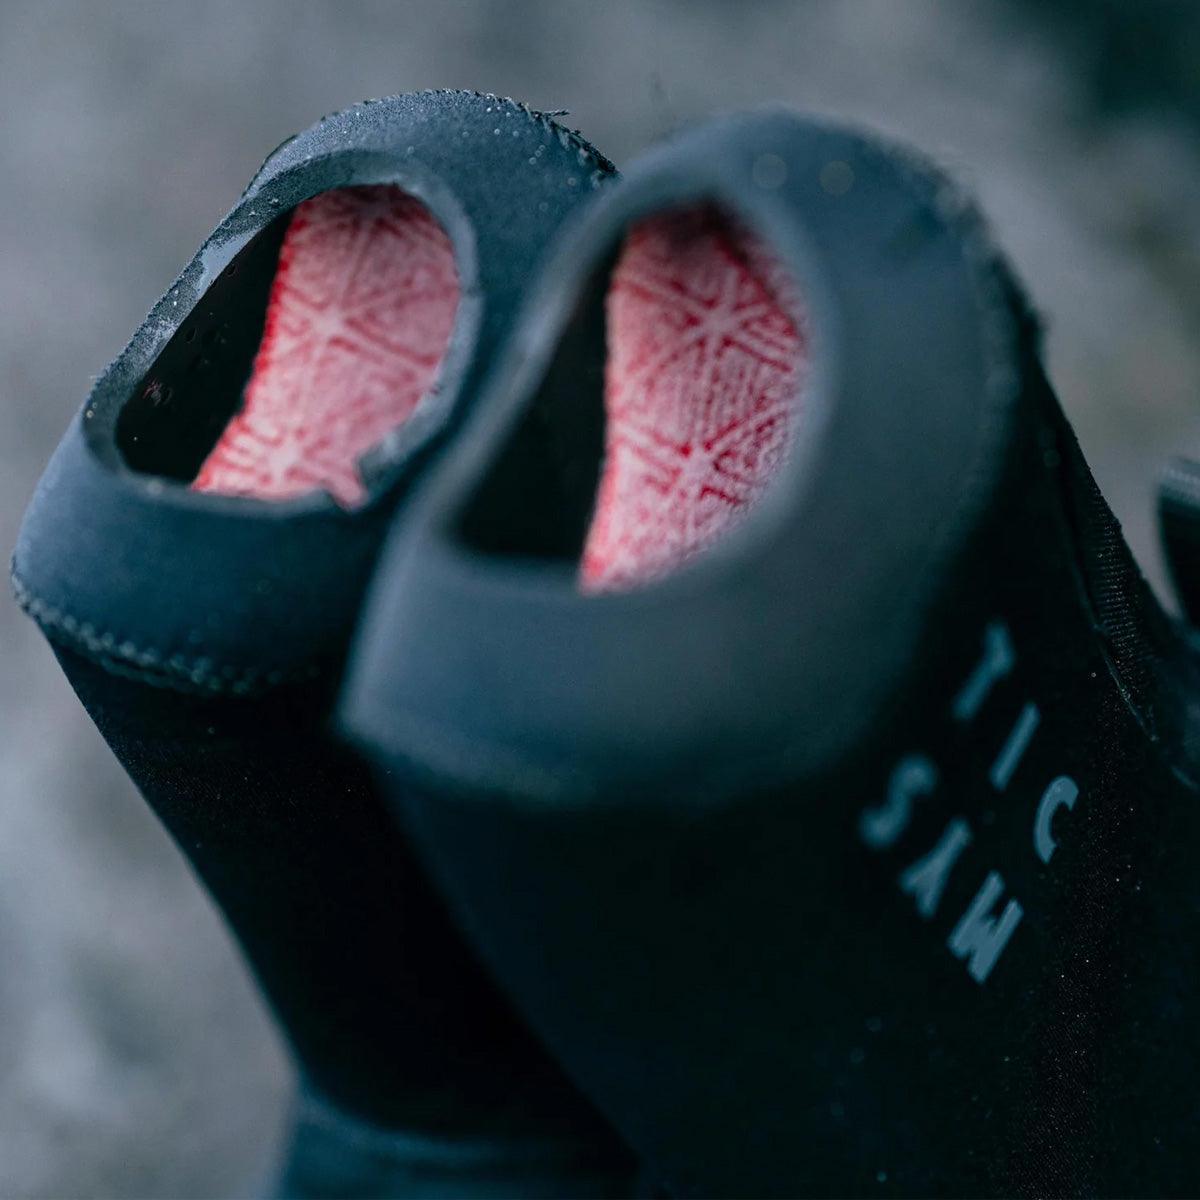 Mystic Supreme 5mm Split-Toe Boots - Kitesurf